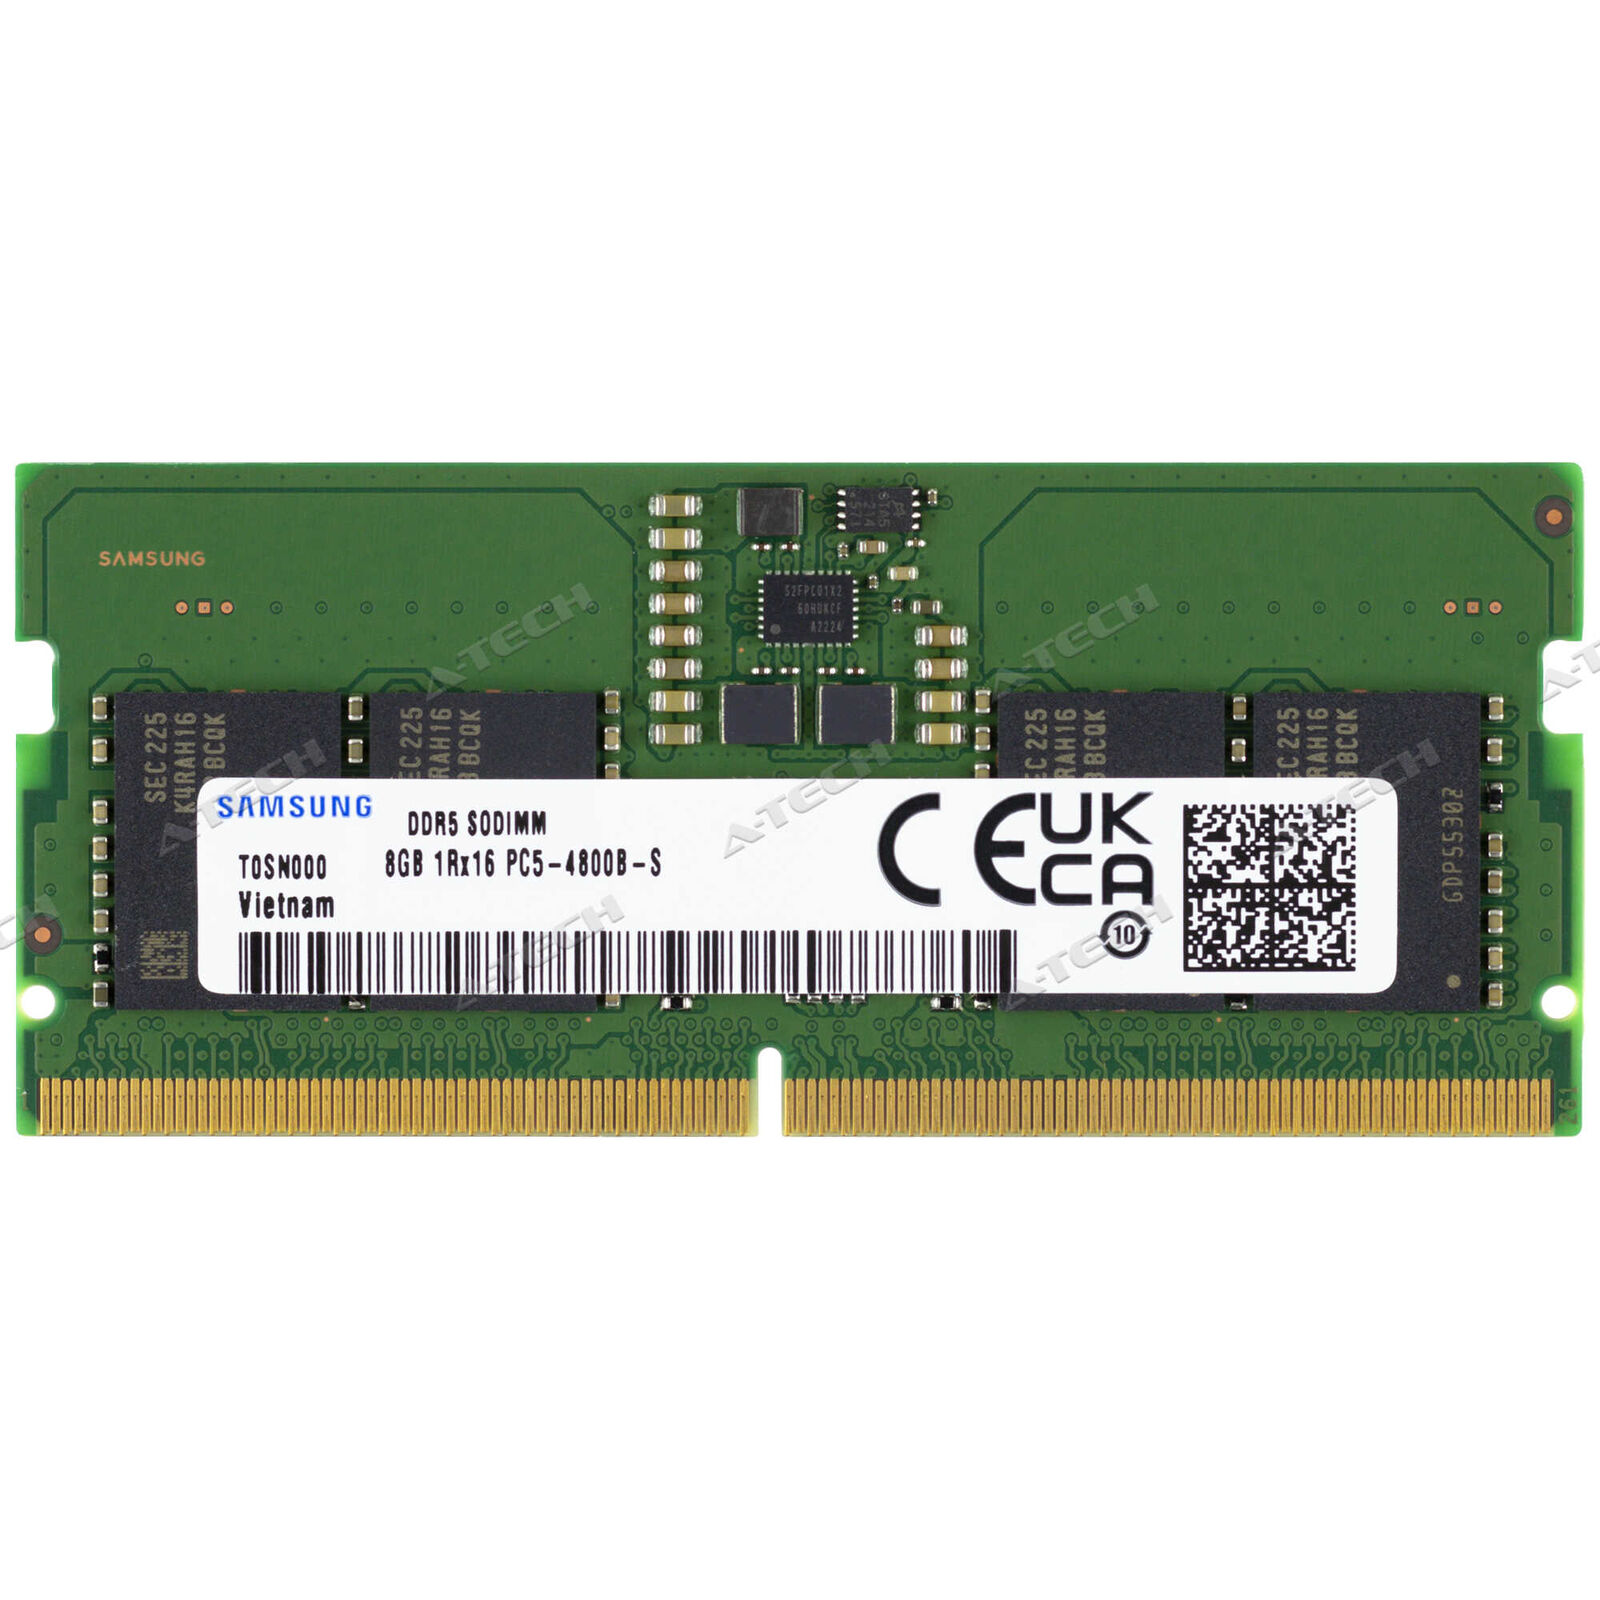 Samsung 8GB DDR5 SODIMM M425R1GB4BB0-CQK M425R1GB4BB0-CQKOL Laptop Memory RAM 1x